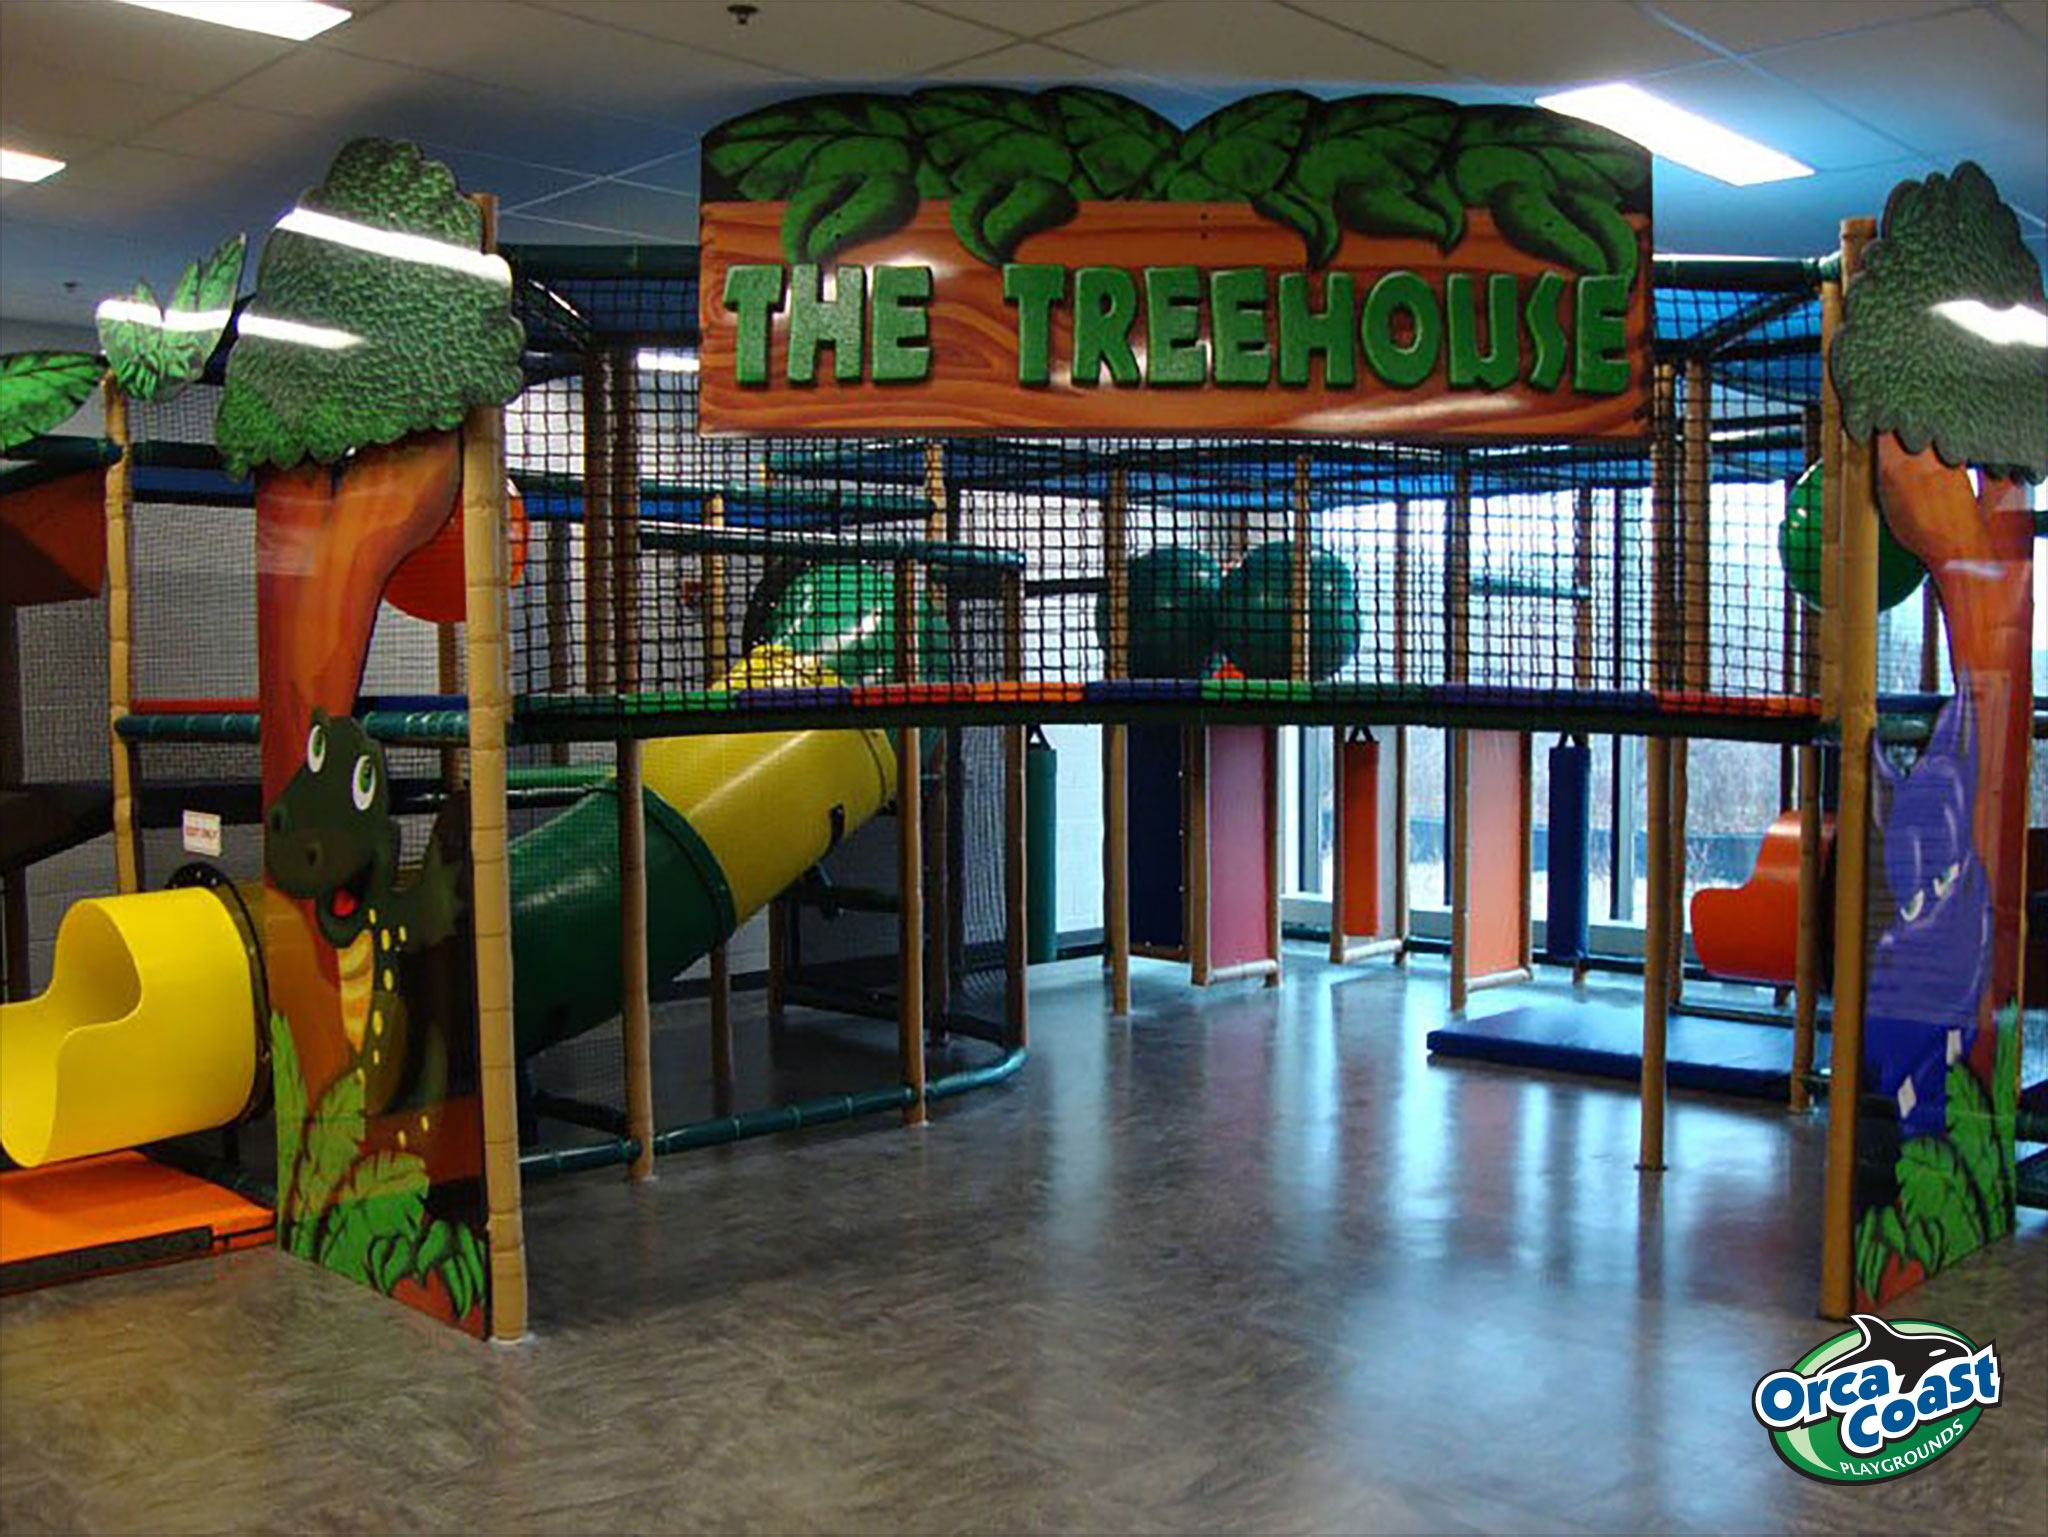 YMCA London, Ontario: Dinosaur-Themed Indoor Playground Adventure | Orca Coast